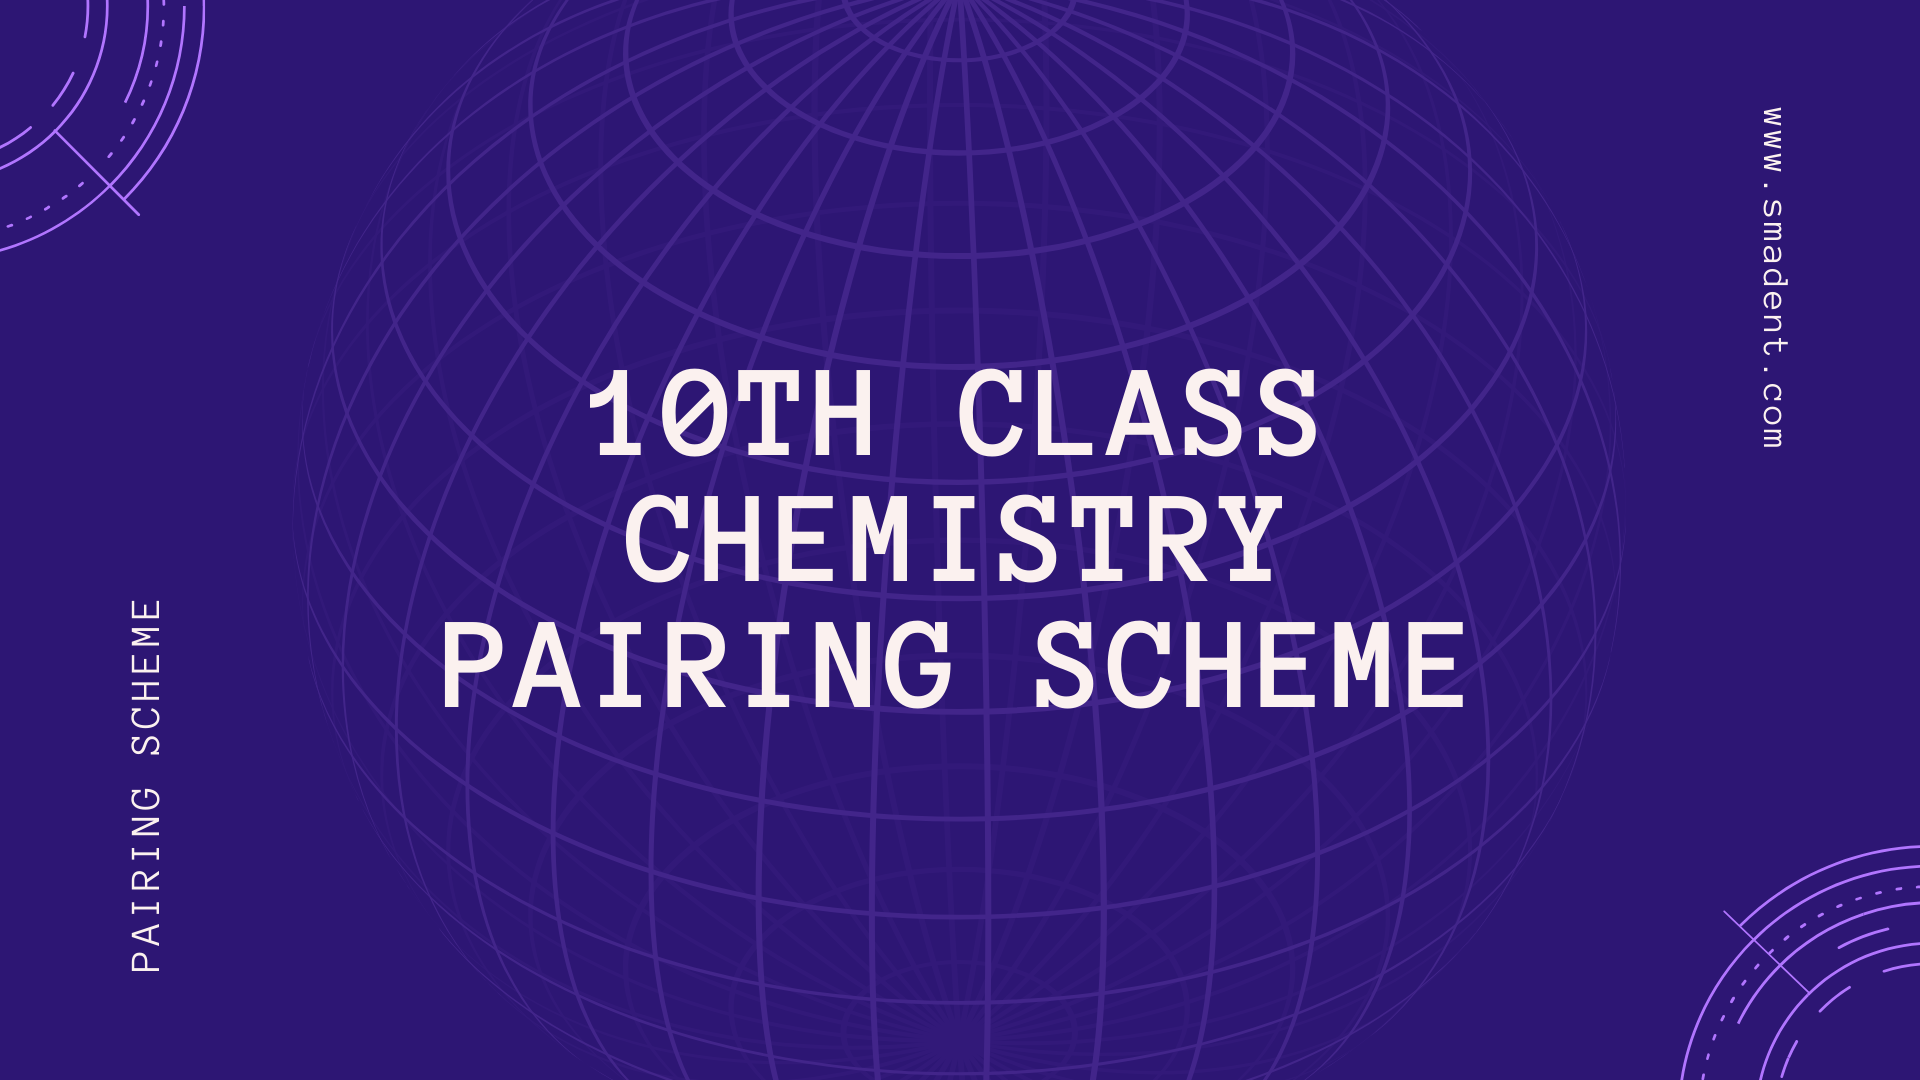 10th Class Chemistry Pairing Scheme